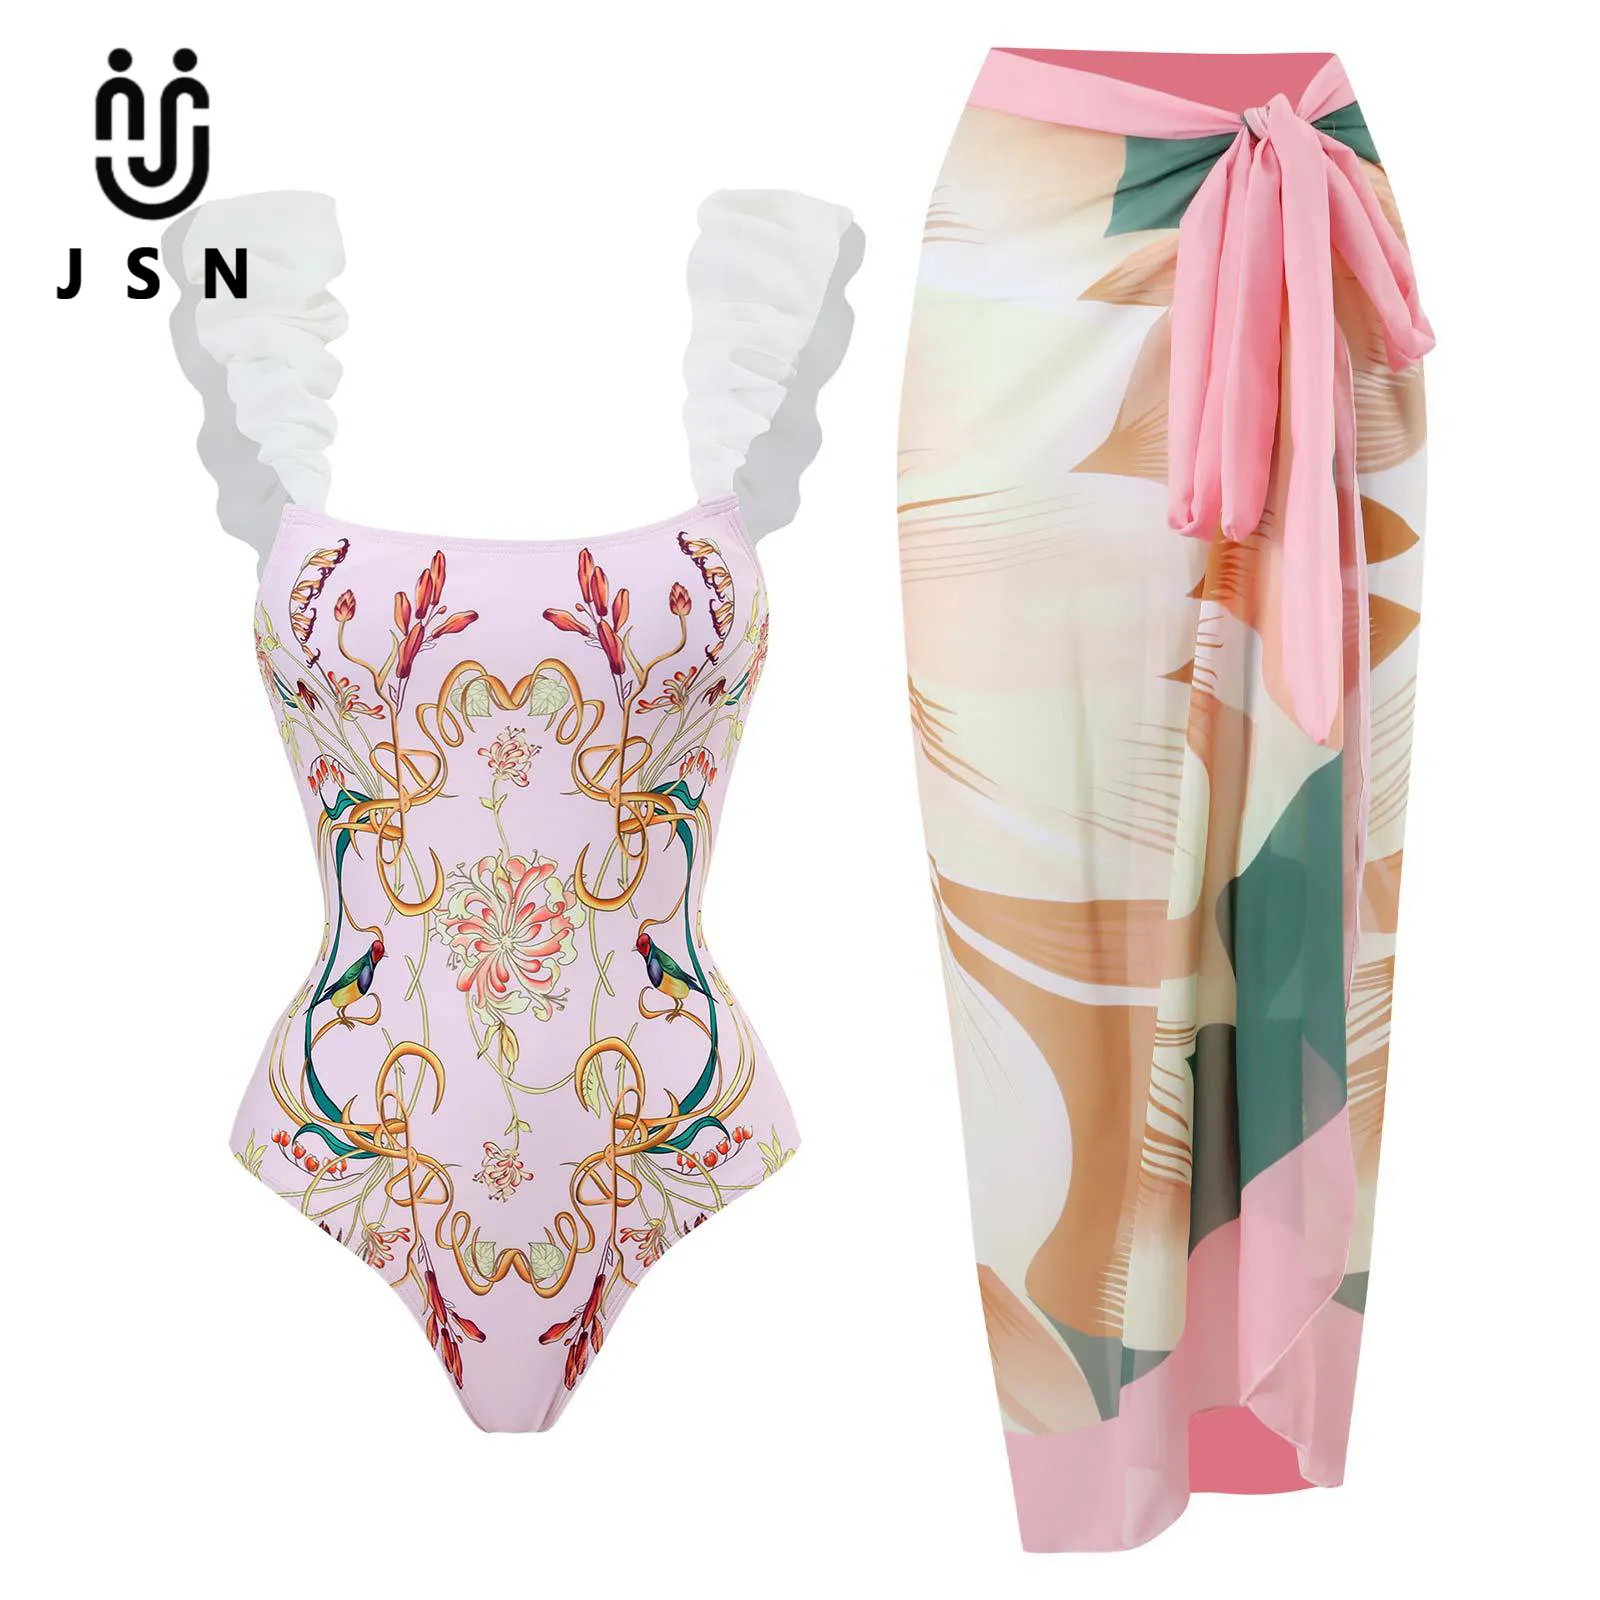 JSN French retro flying one piece swimsuit trajes de bano para mujeres womens swimwear beachwear